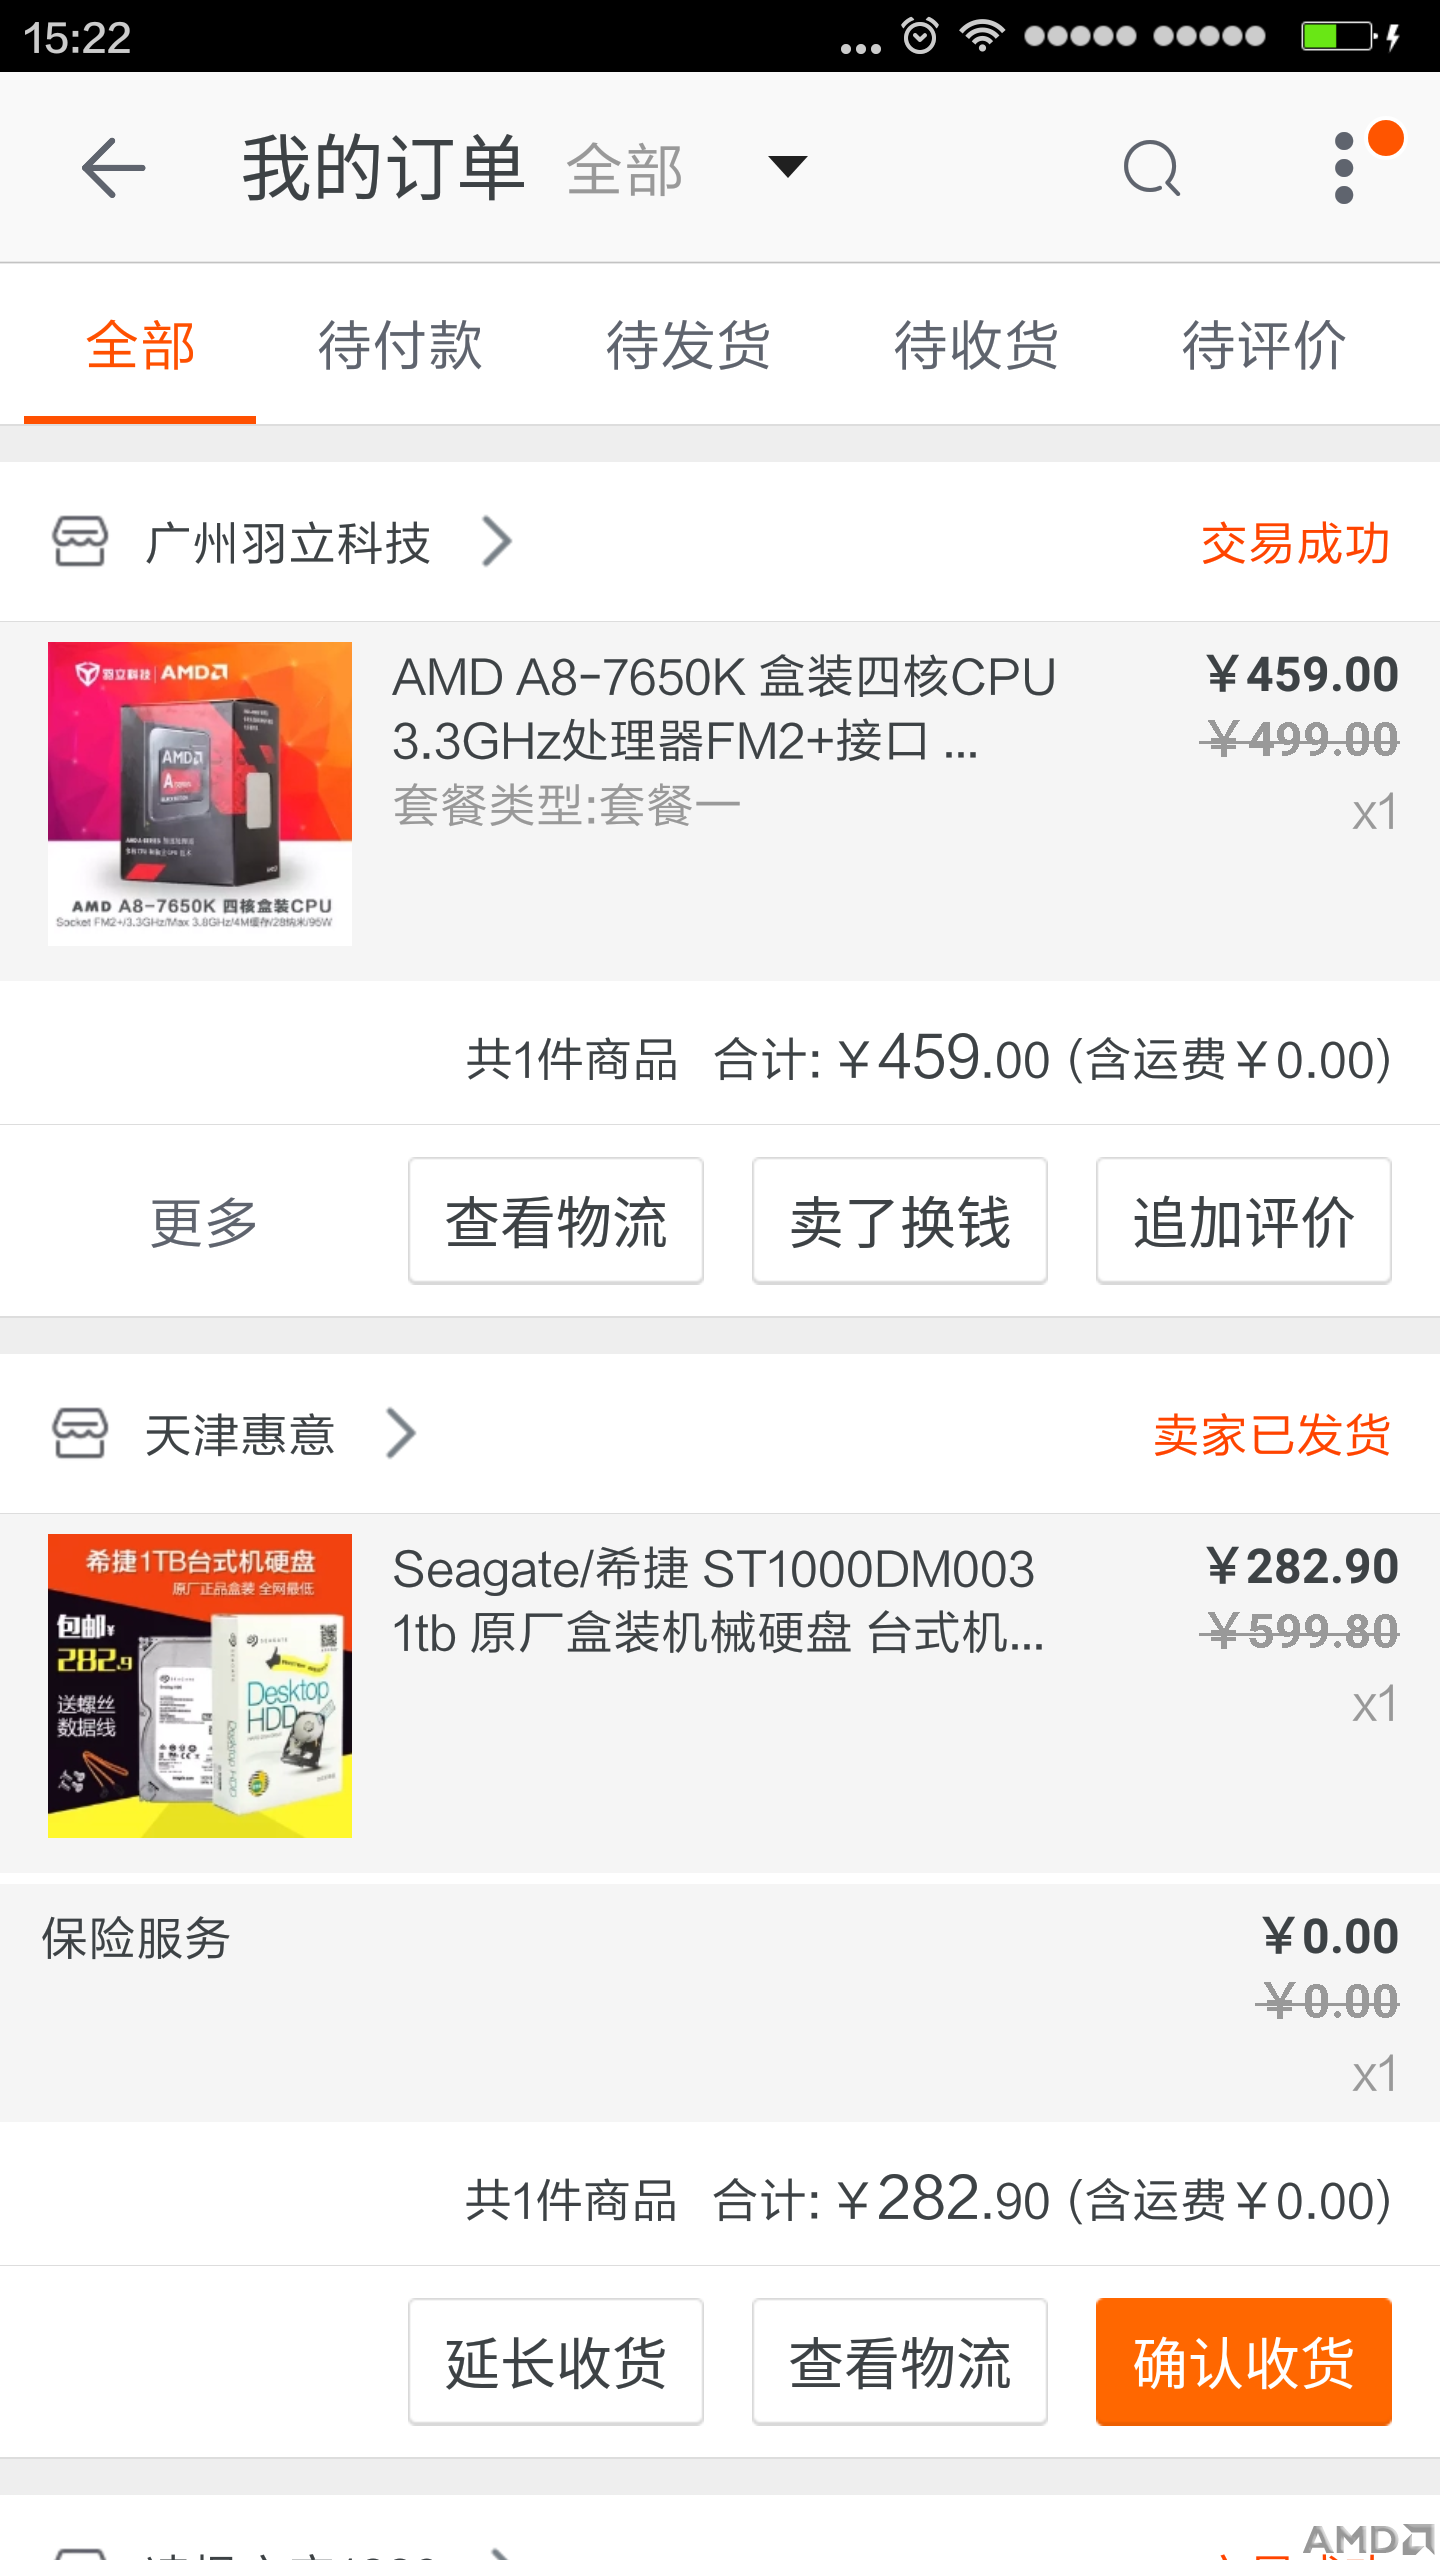 Screenshot_2016-05-26-15-22-58_com.taobao.taobao.png